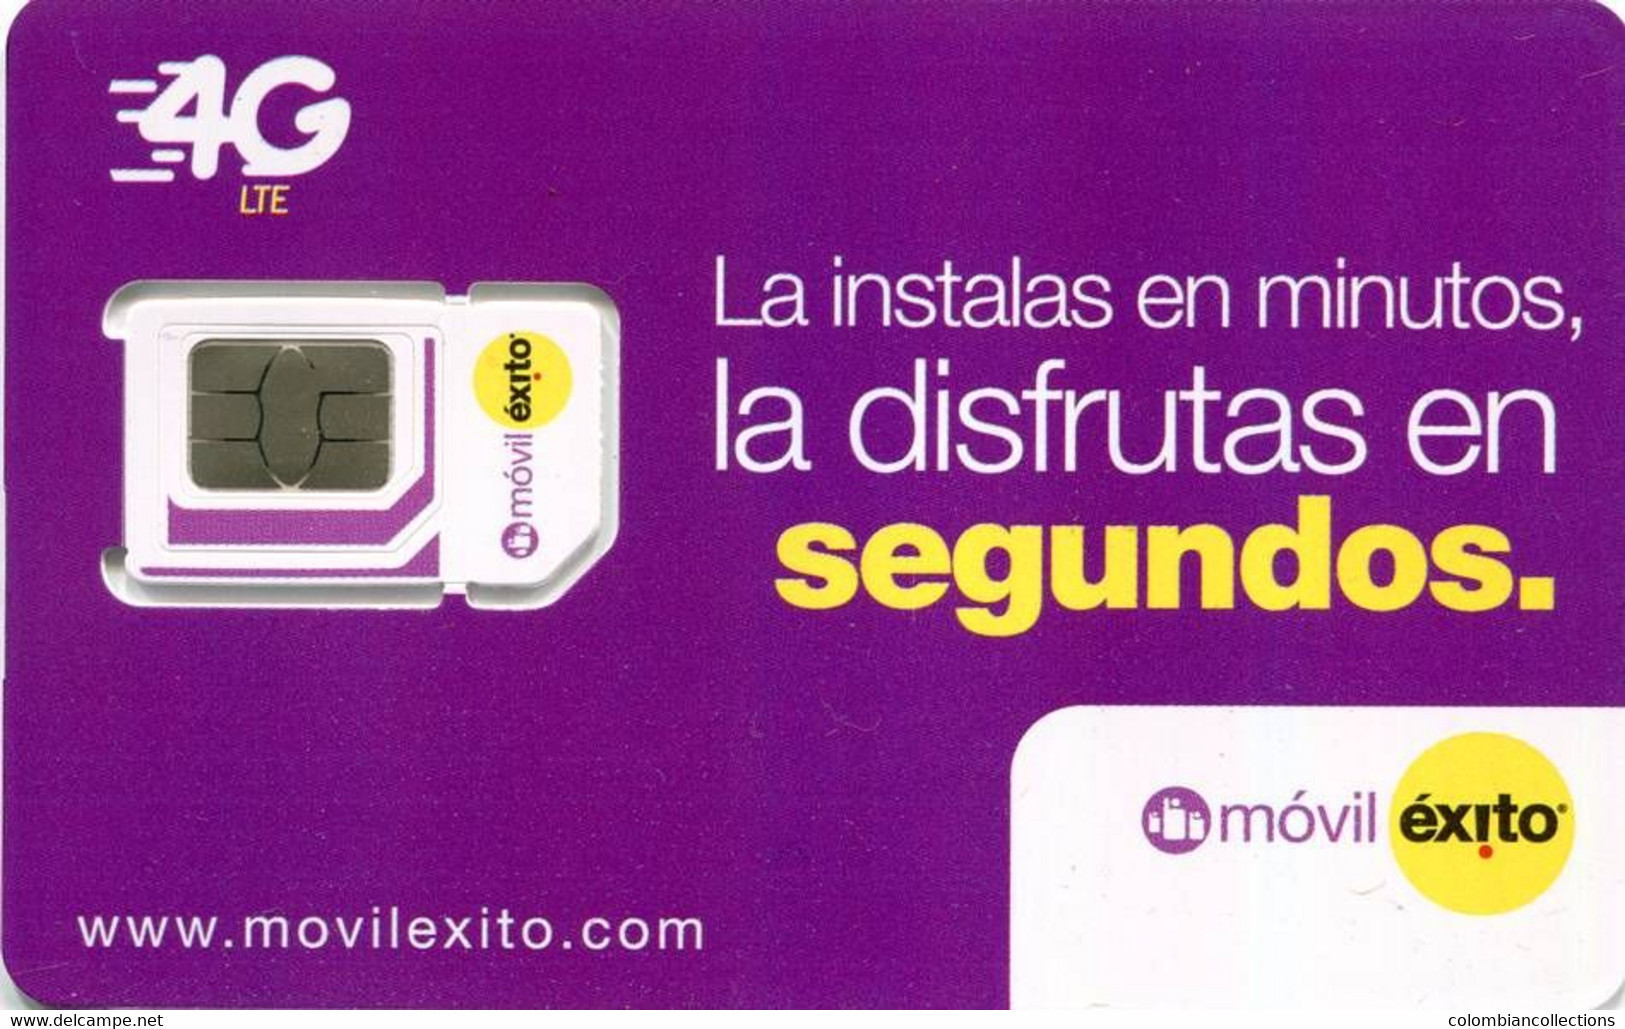 Lote TT241, Colombia, Tarjeta Telefonica, Phone Card, SIM Card Prepago, Movil Exito 4G Lite - Colombie